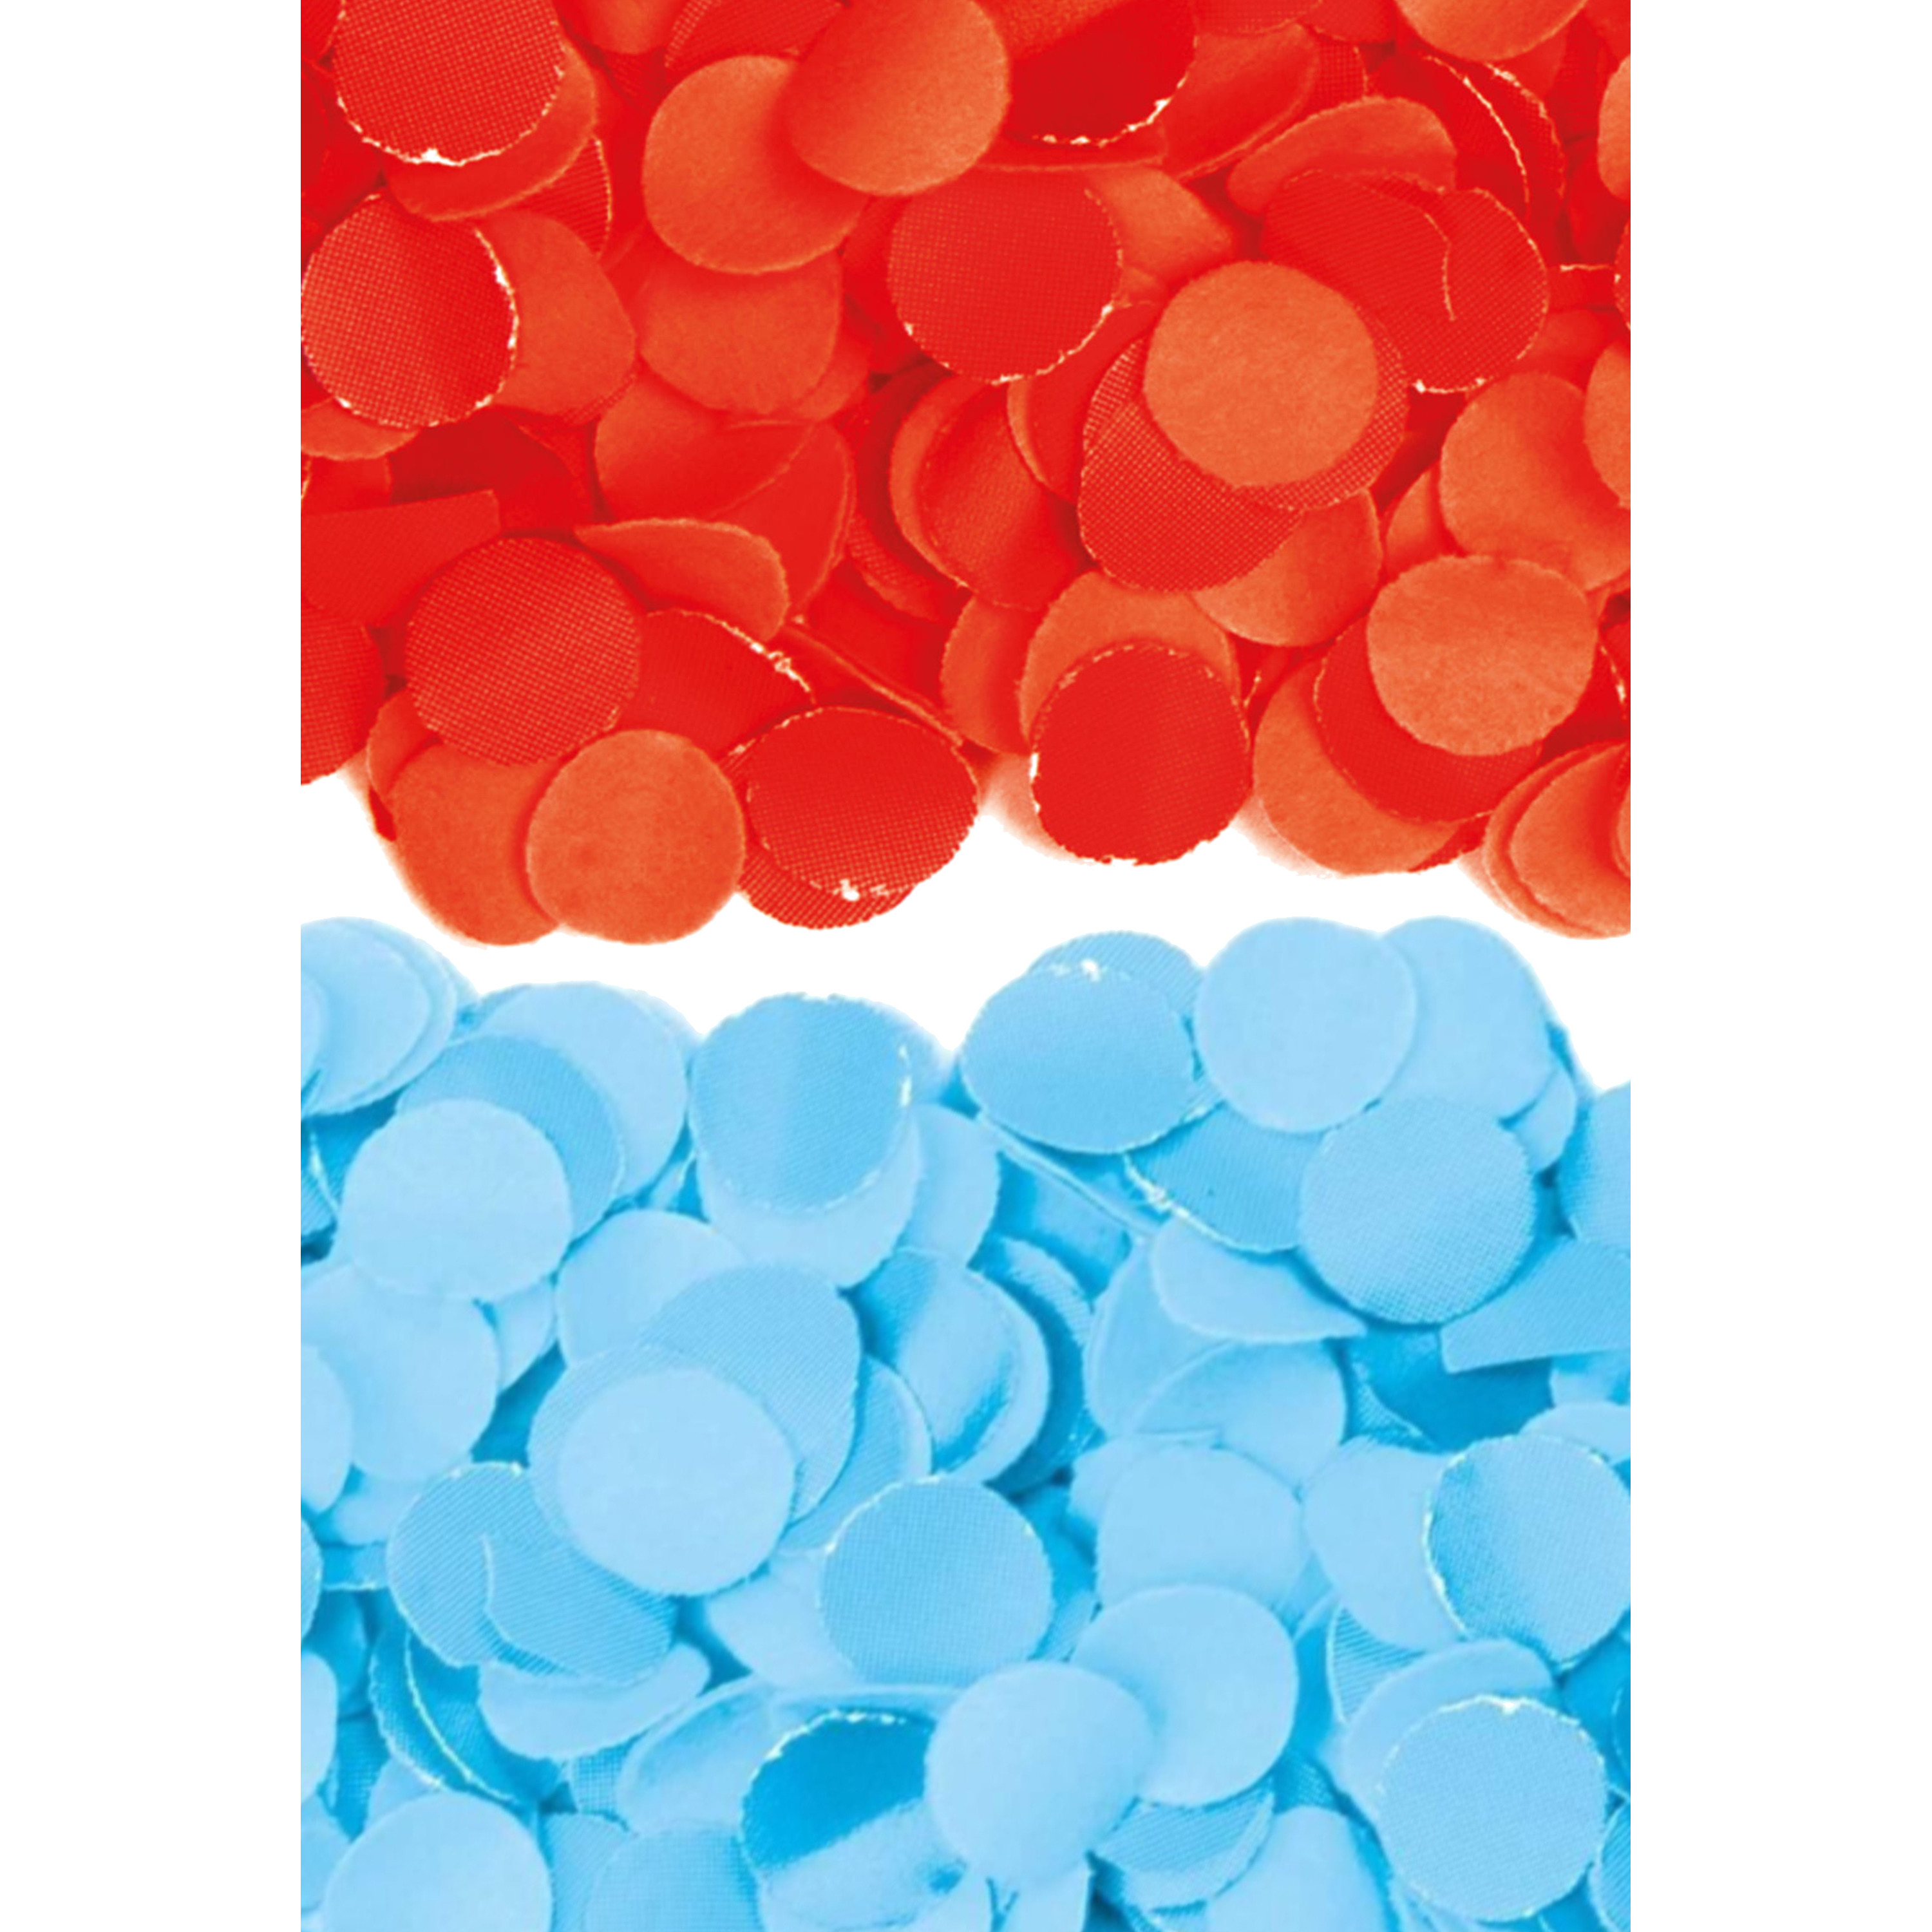 400 gram rood en blauwe papier snippers confetti mix set feest versiering